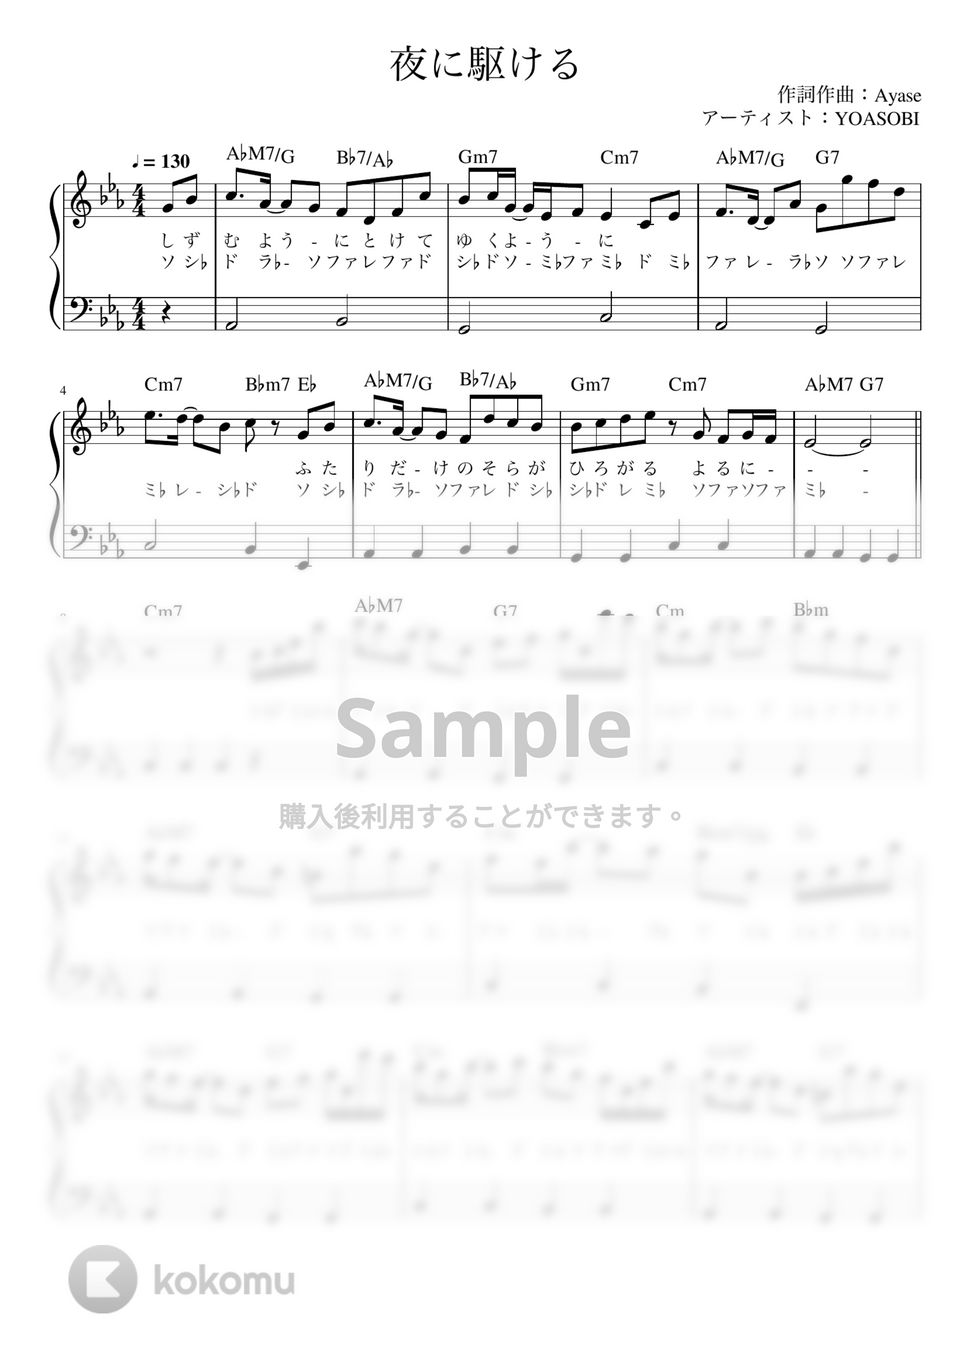 YOASOBI - 夜に駆ける (ピアノ かんたん 歌詞付き ドレミ付き 初心者) by piano.tokyo